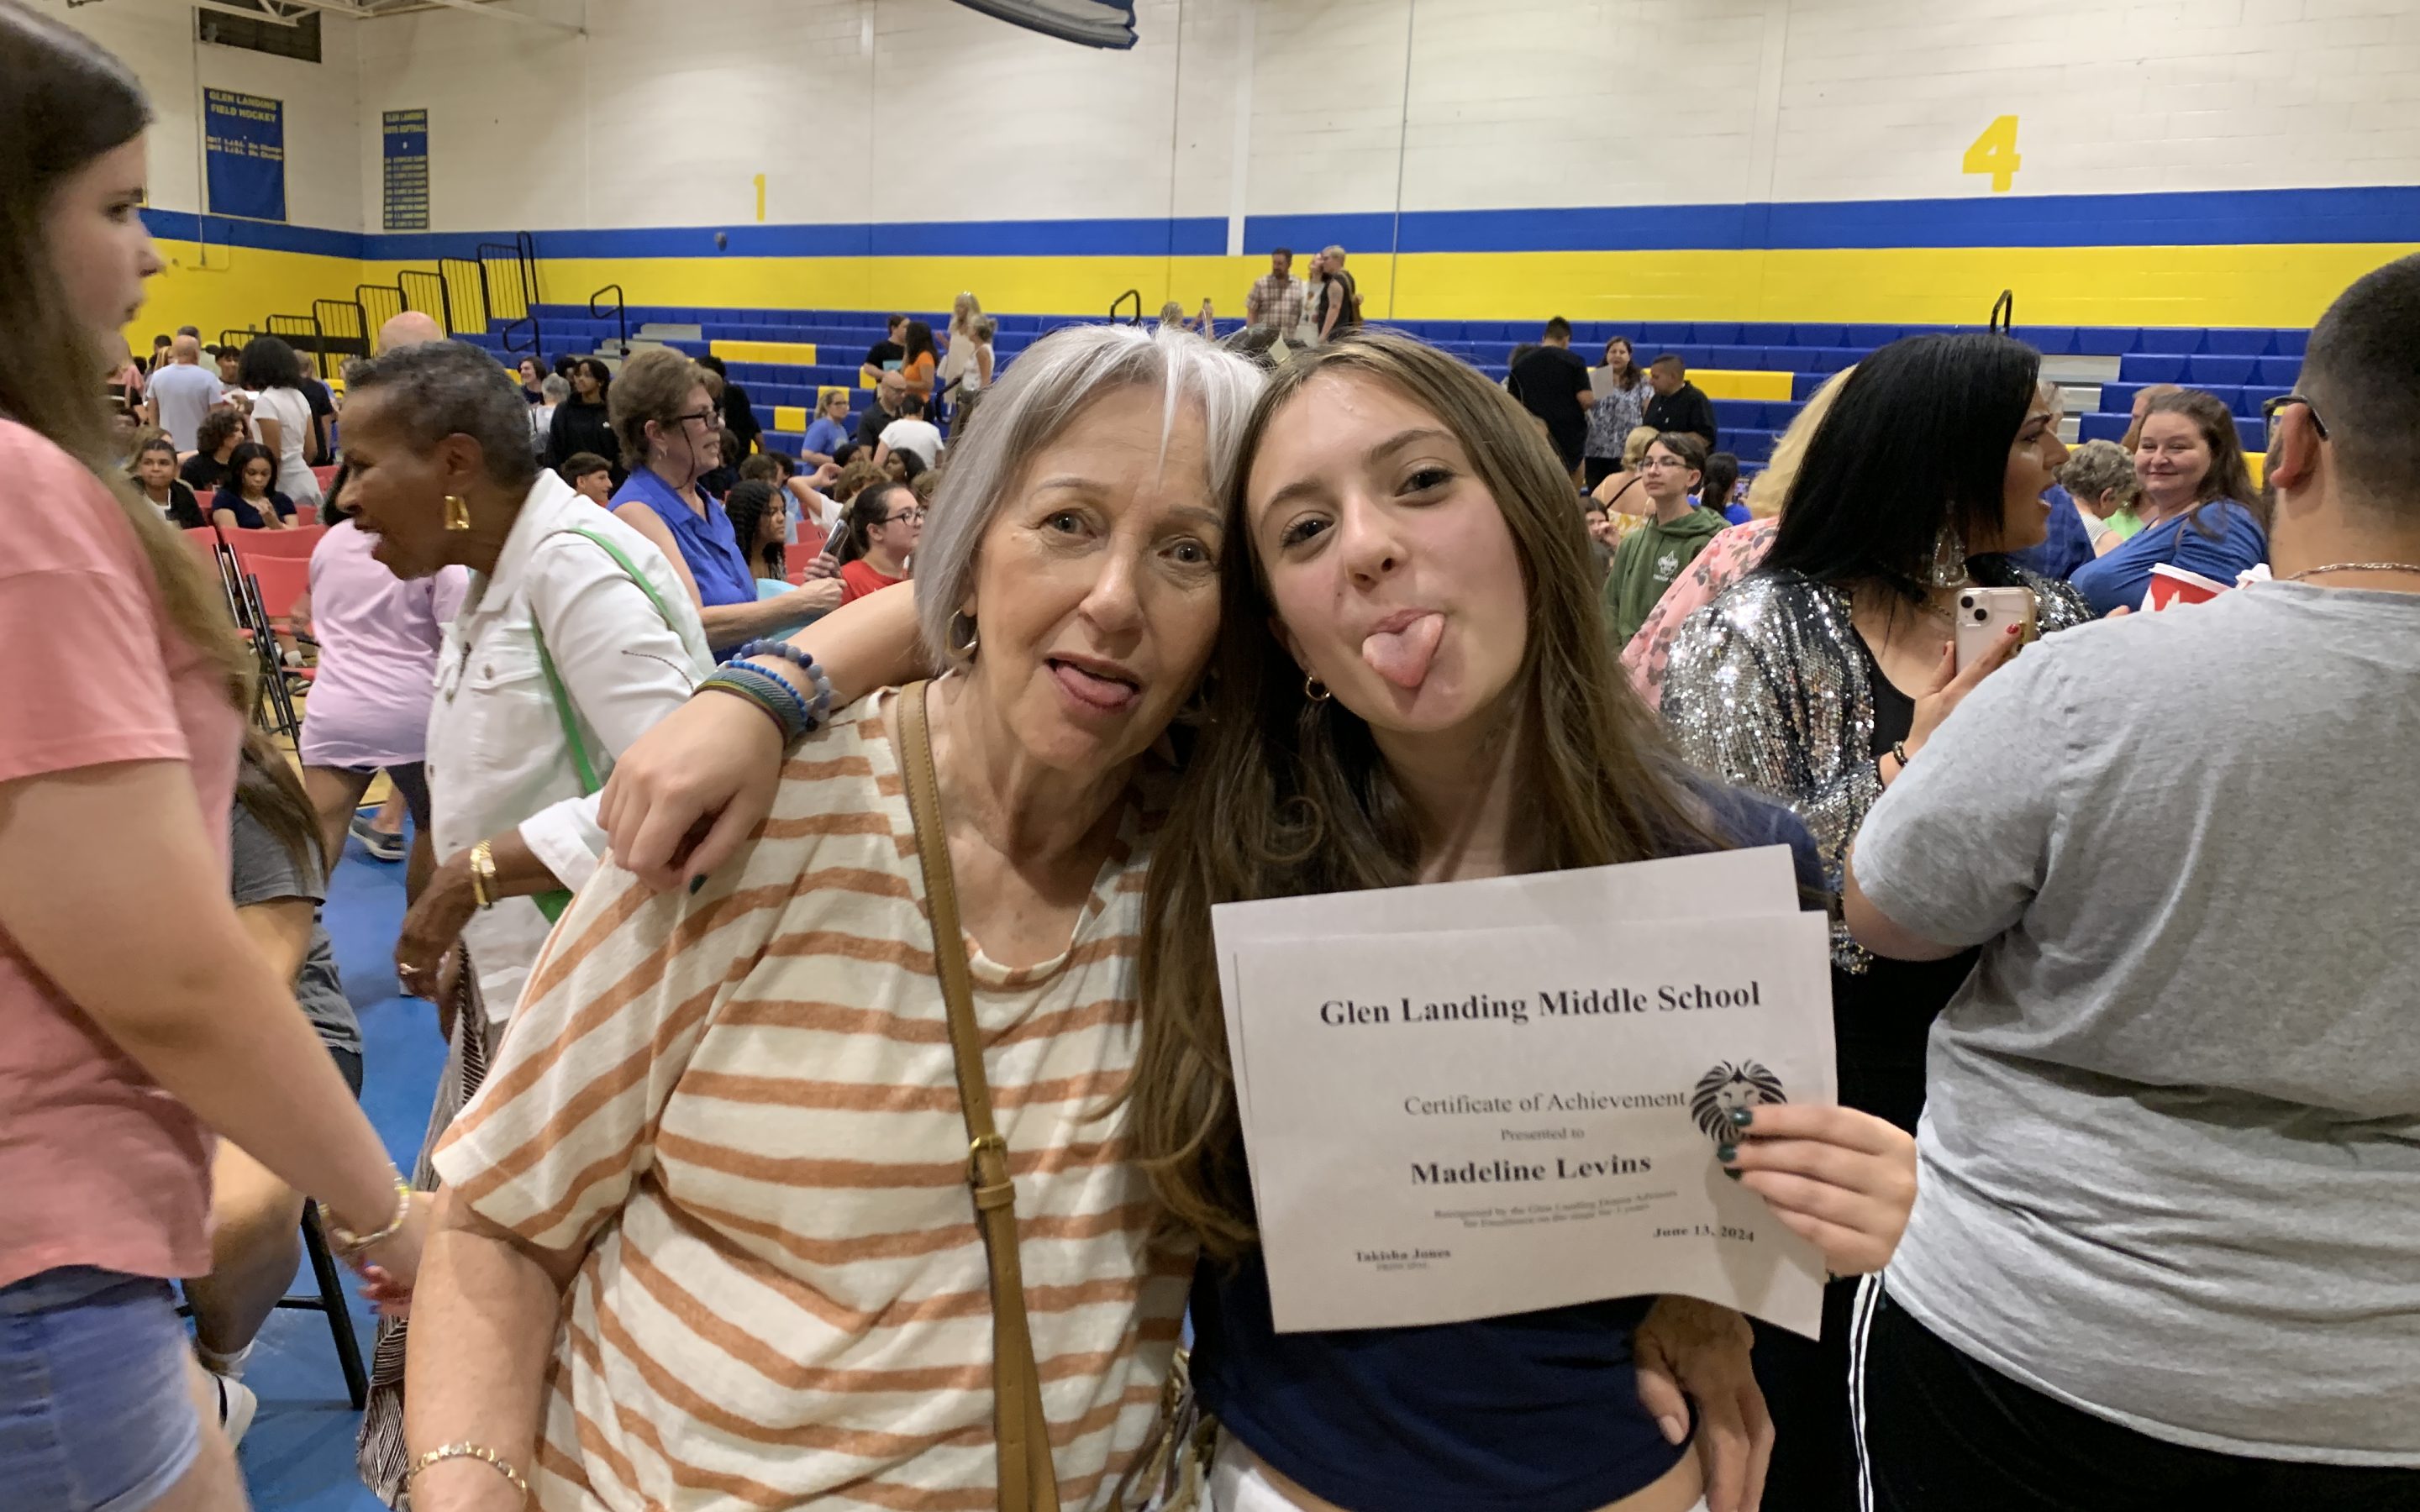 She graduates… but first AWARDS!